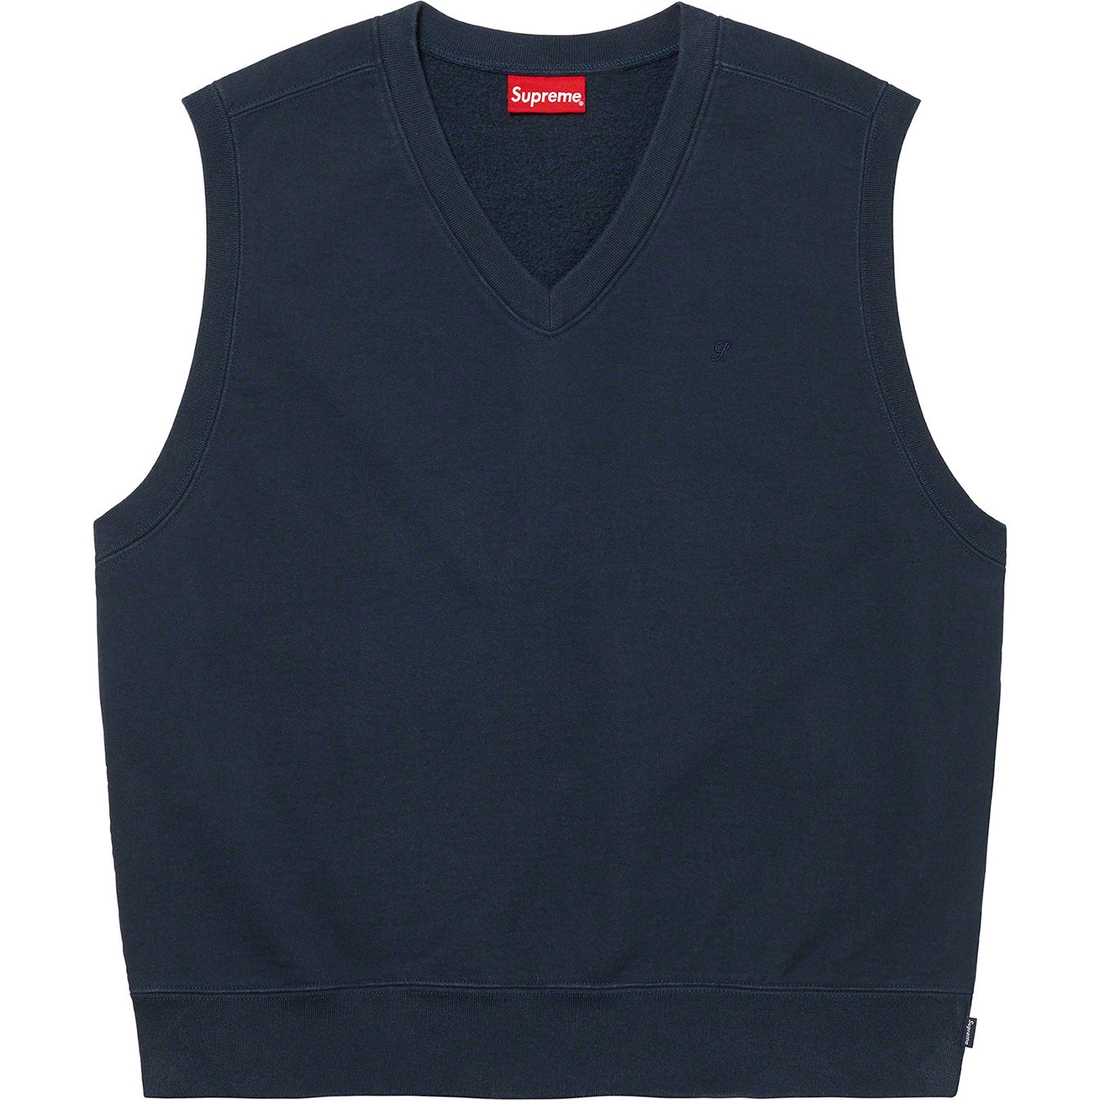 Details on Sweatshirt Vest Navy from spring summer 2023 (Price is $128)